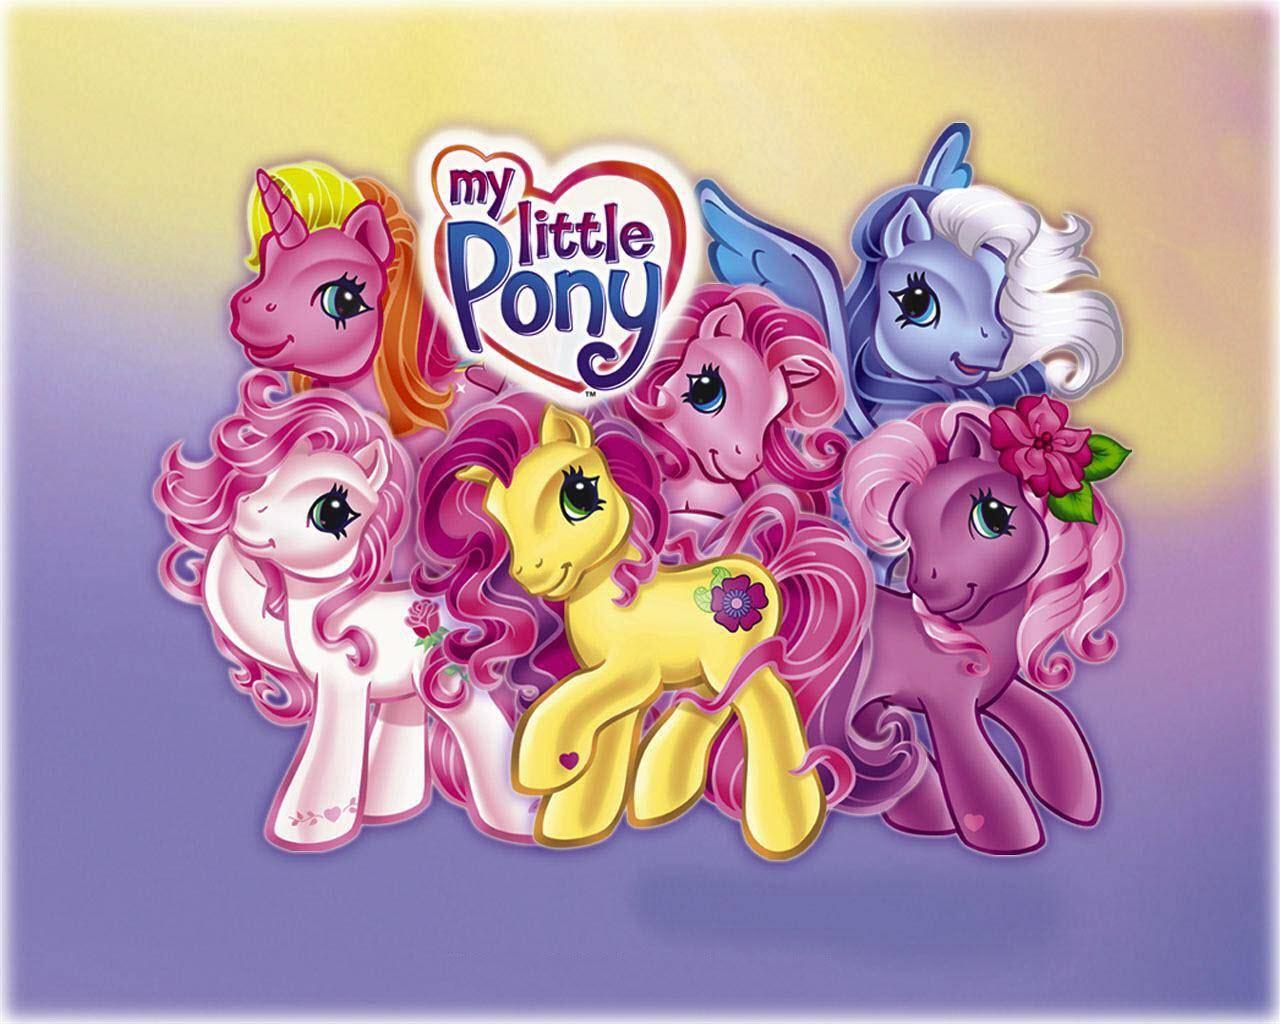 My Little Pony Friendship is Magic HD Wallpaper. Download HD